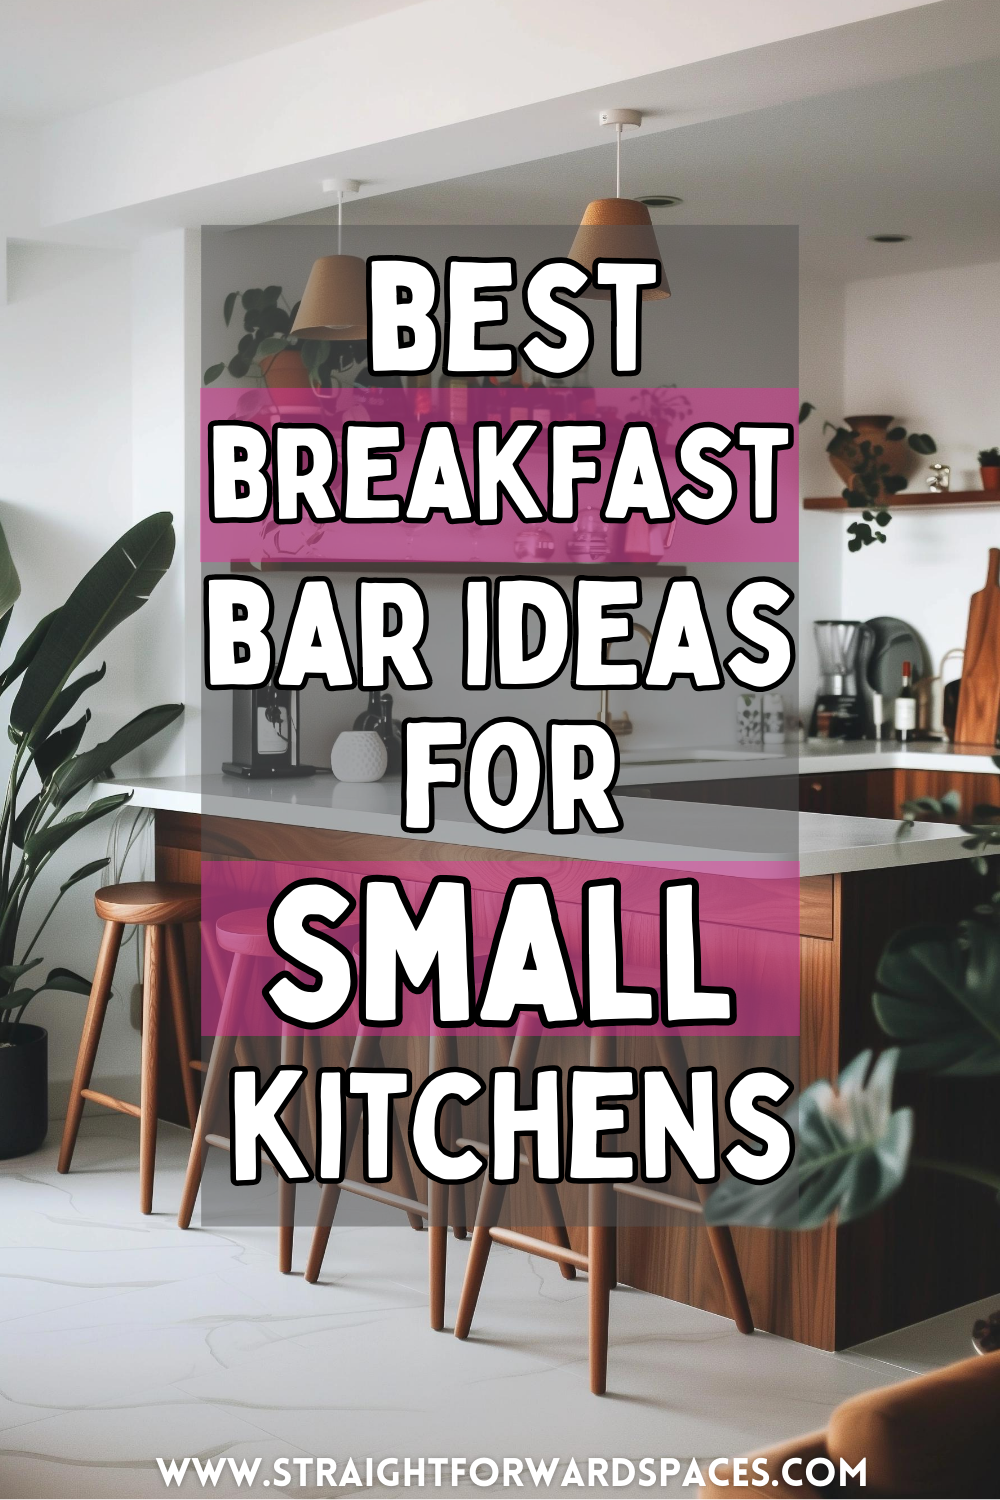 DIY breakfast bar ideas